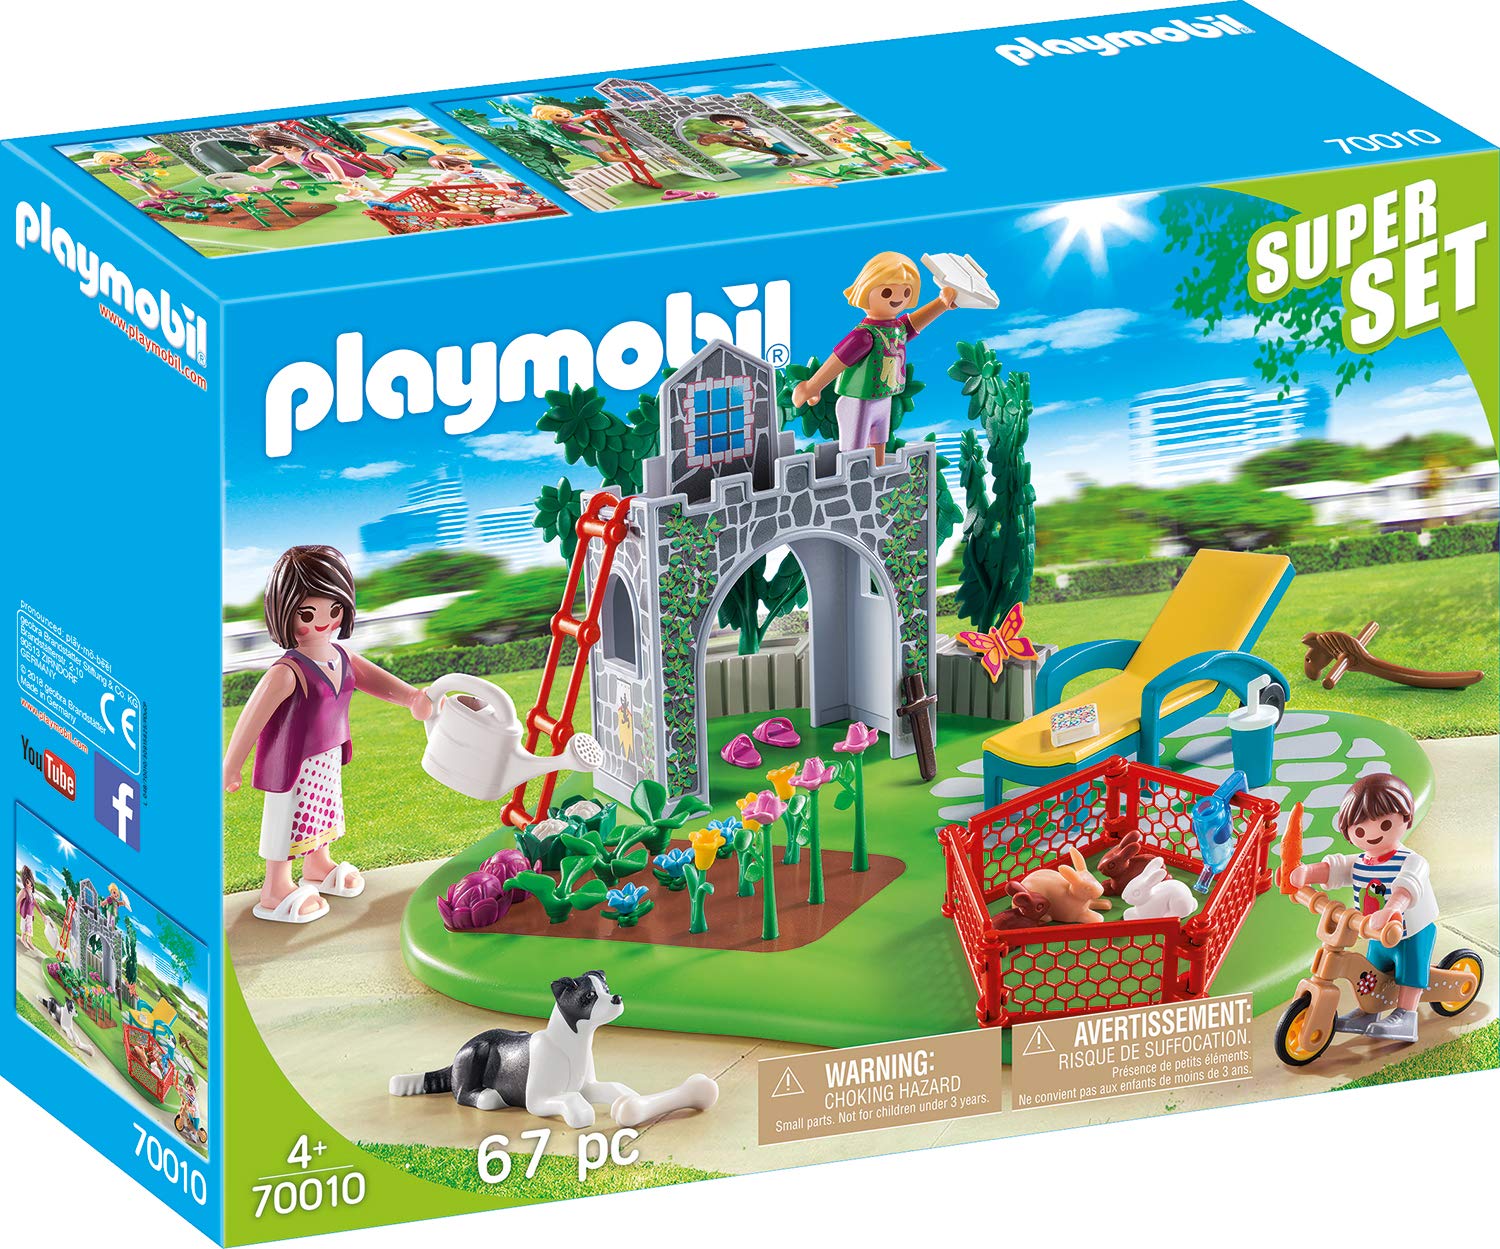 Playmobil Superset 70010 Family Garden Colourful